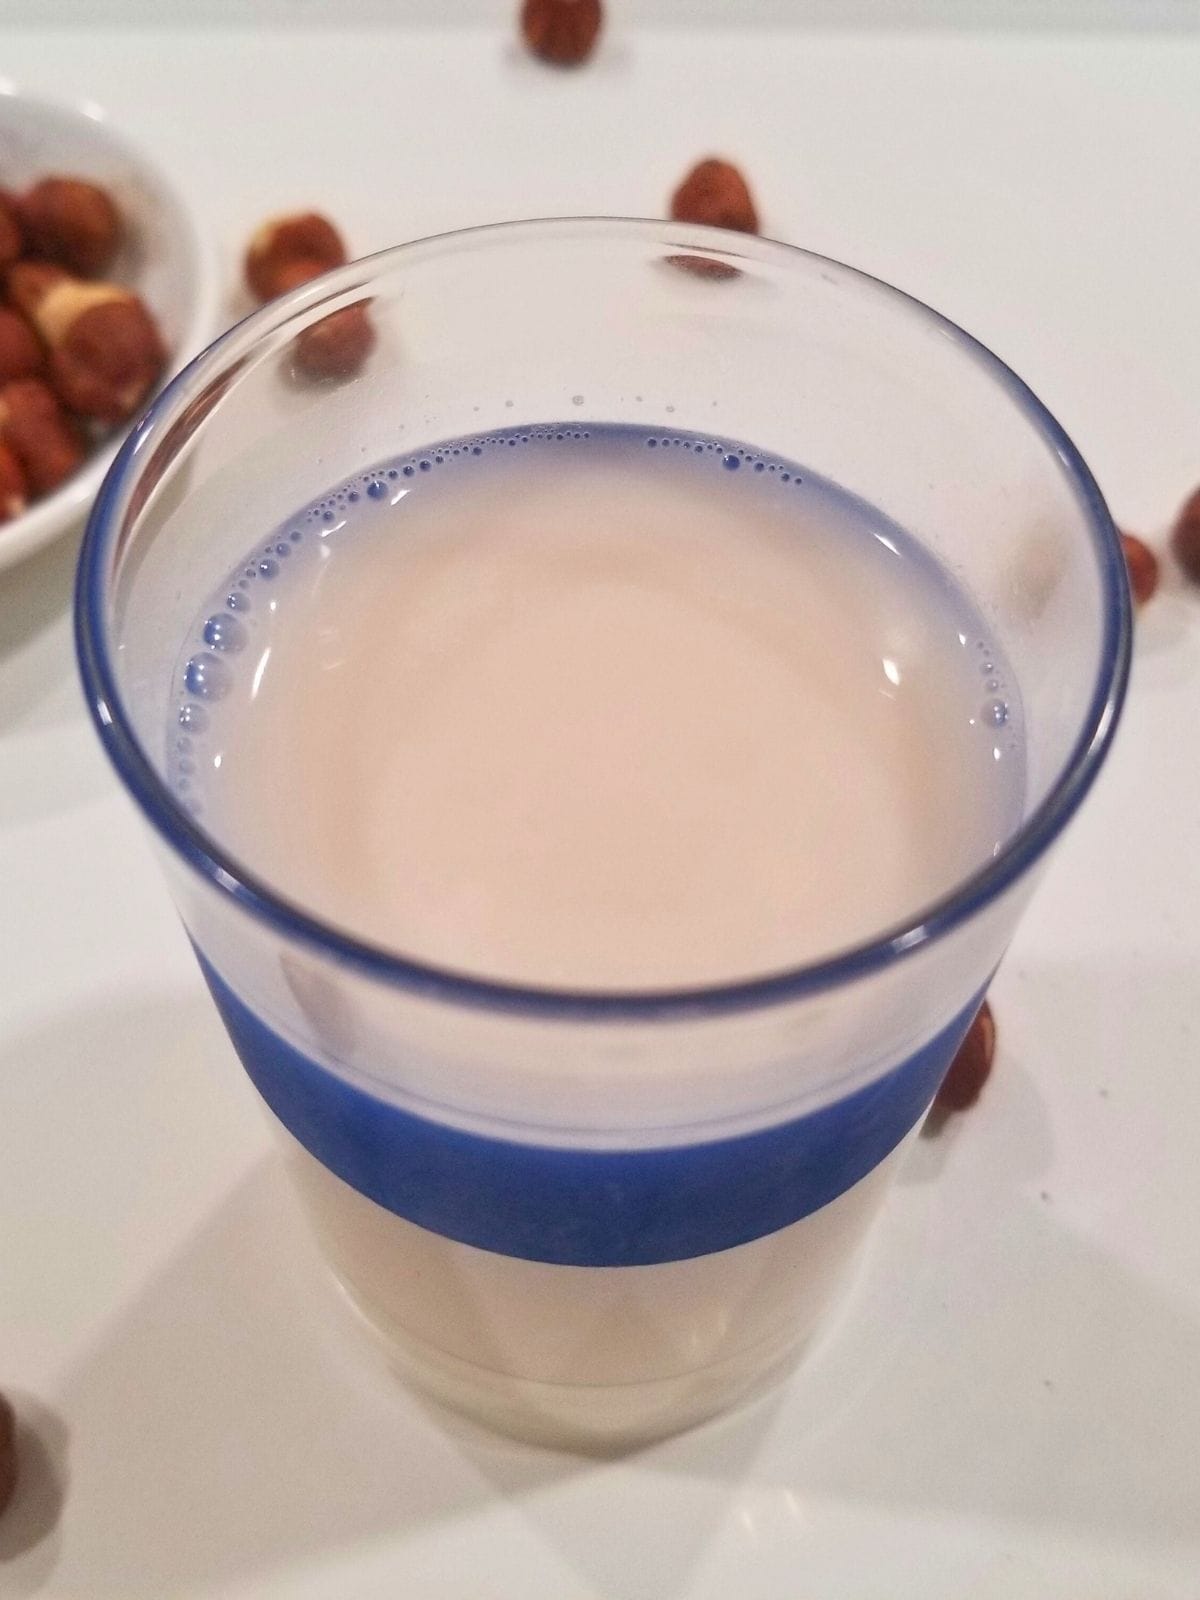 hazelnut milk in a drinking glass.